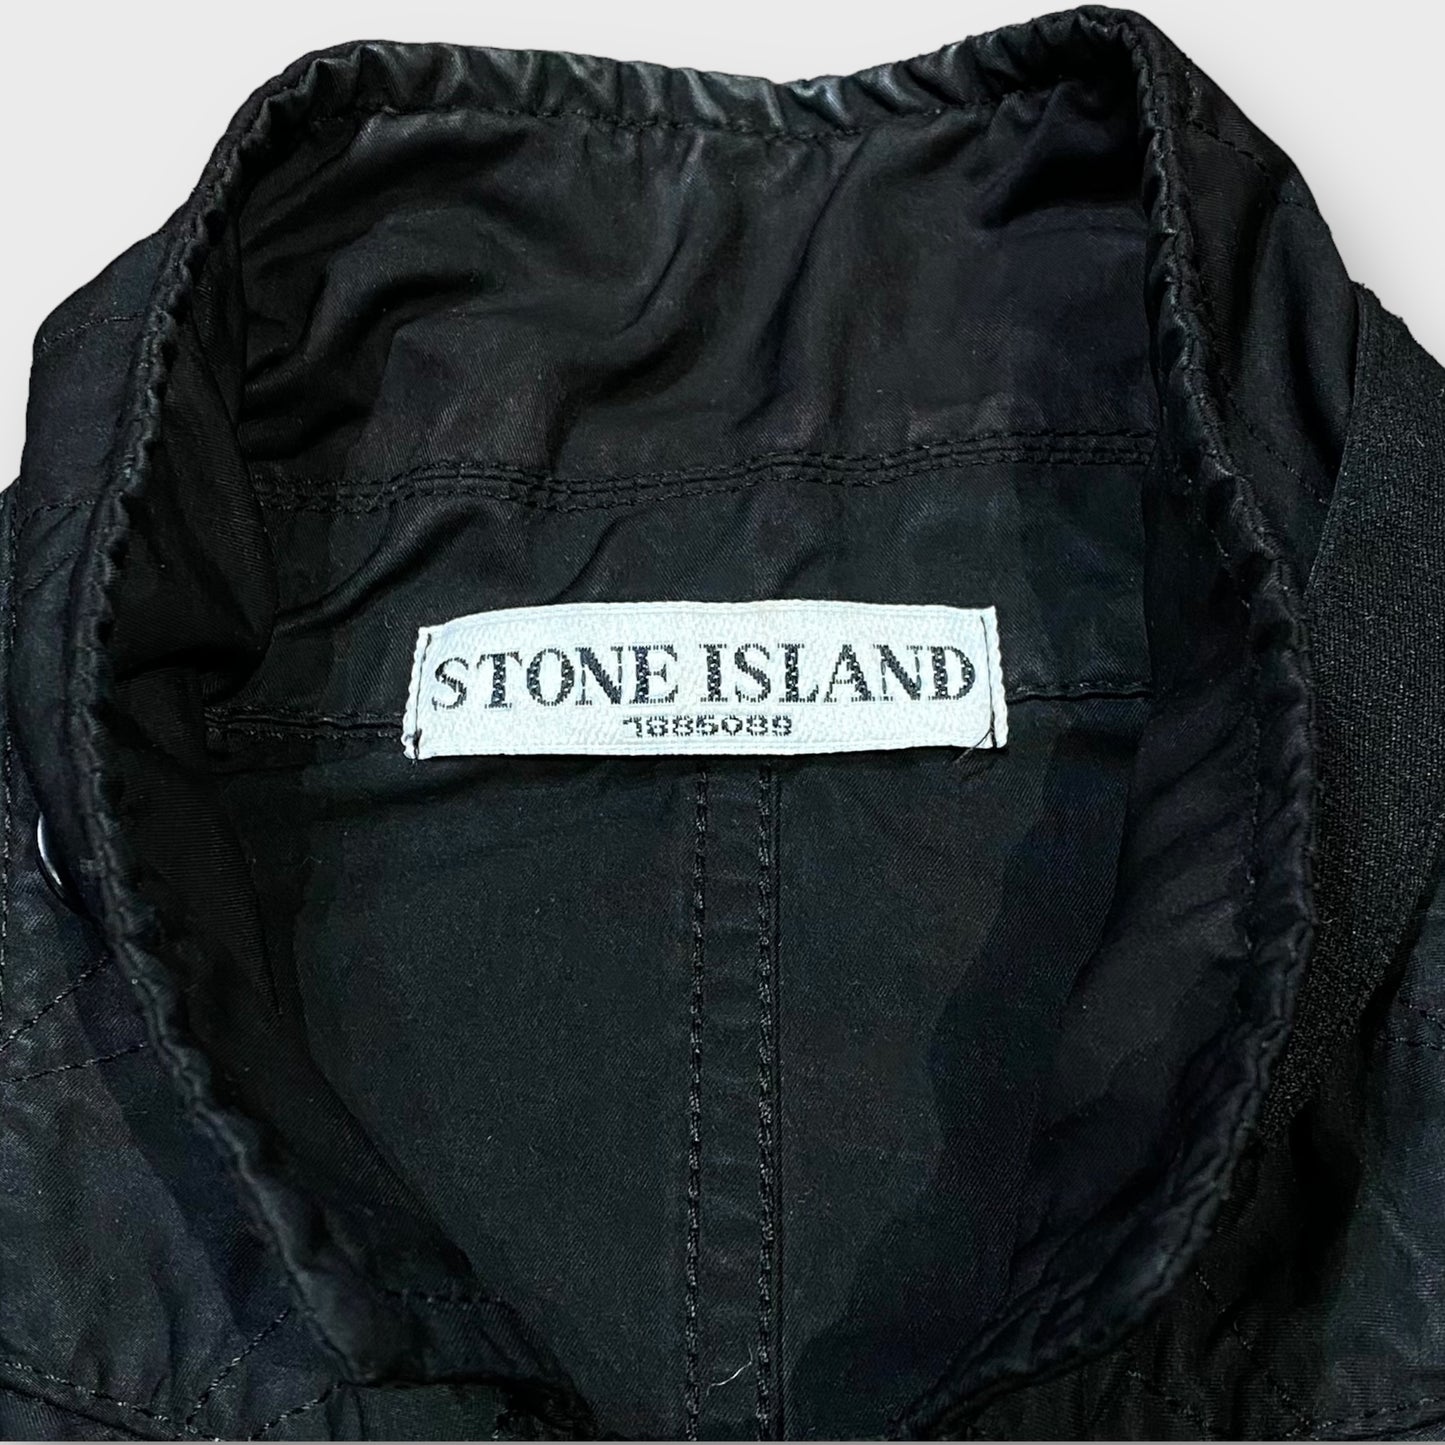 2010 S/S "STONE ISLAND" David TC multi pocket field jacket